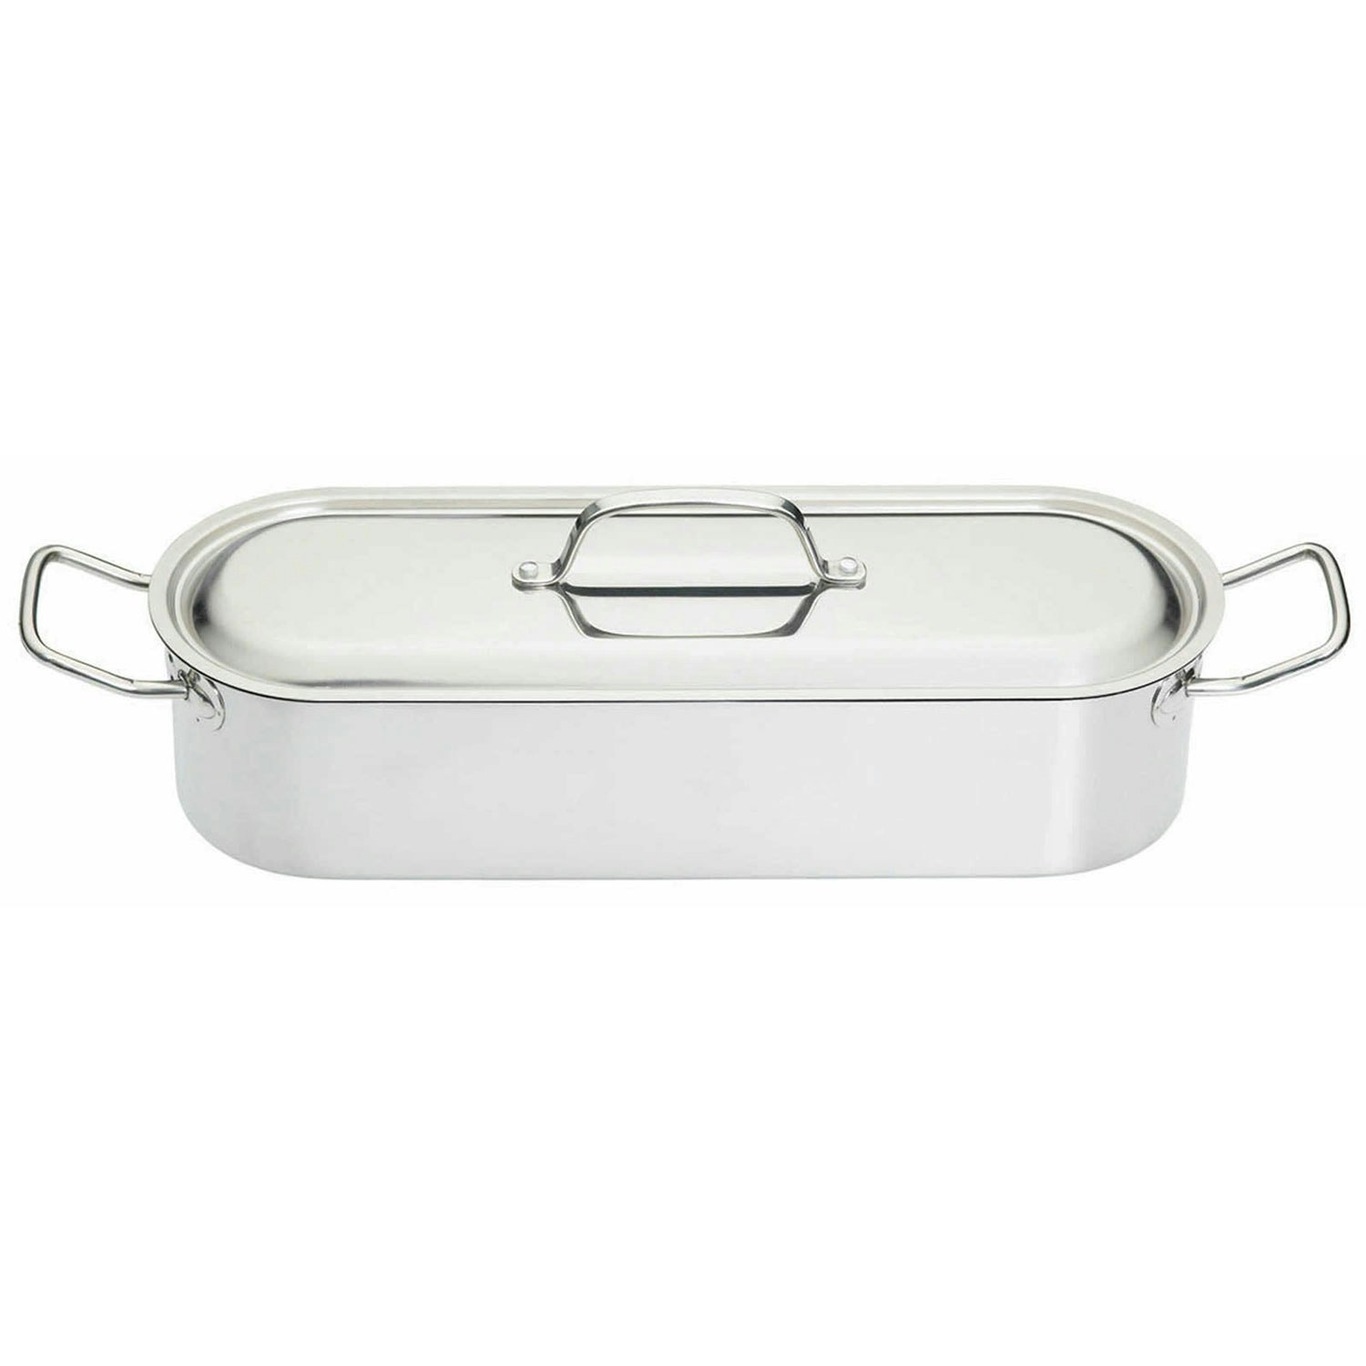 https://royaldesign.com/image/2/kitchen-craft-stainless-steel-fish-poacher-w-rack-45cm-gift-box-1?w=800&quality=80